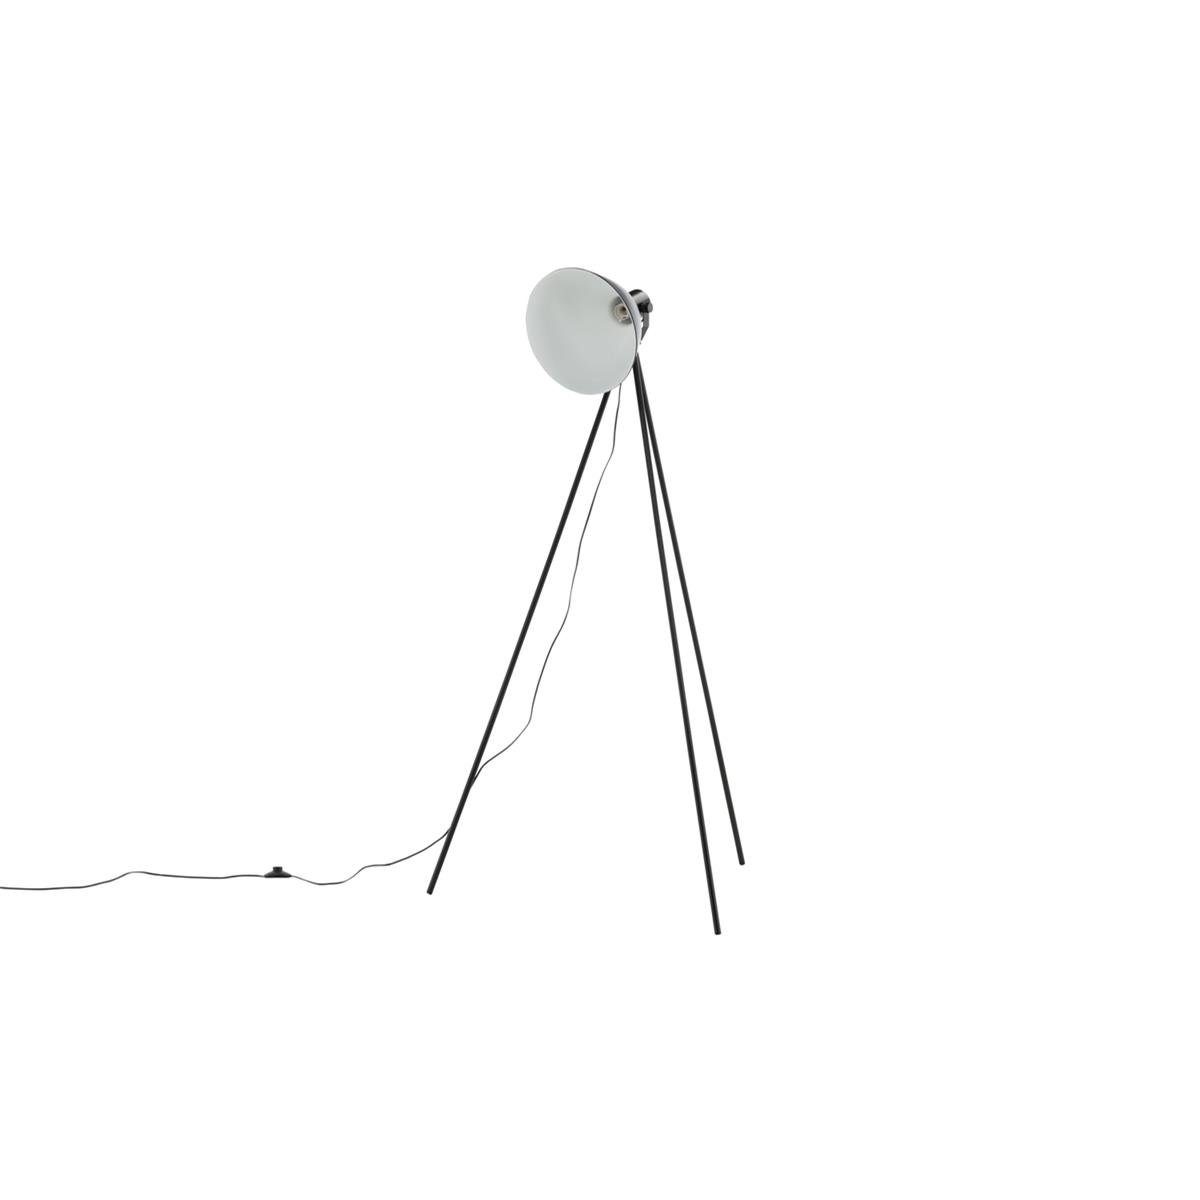 Design Industrial 140 - cm Stehlampe - Lampe BOURGH TIV hoch Stehlampe